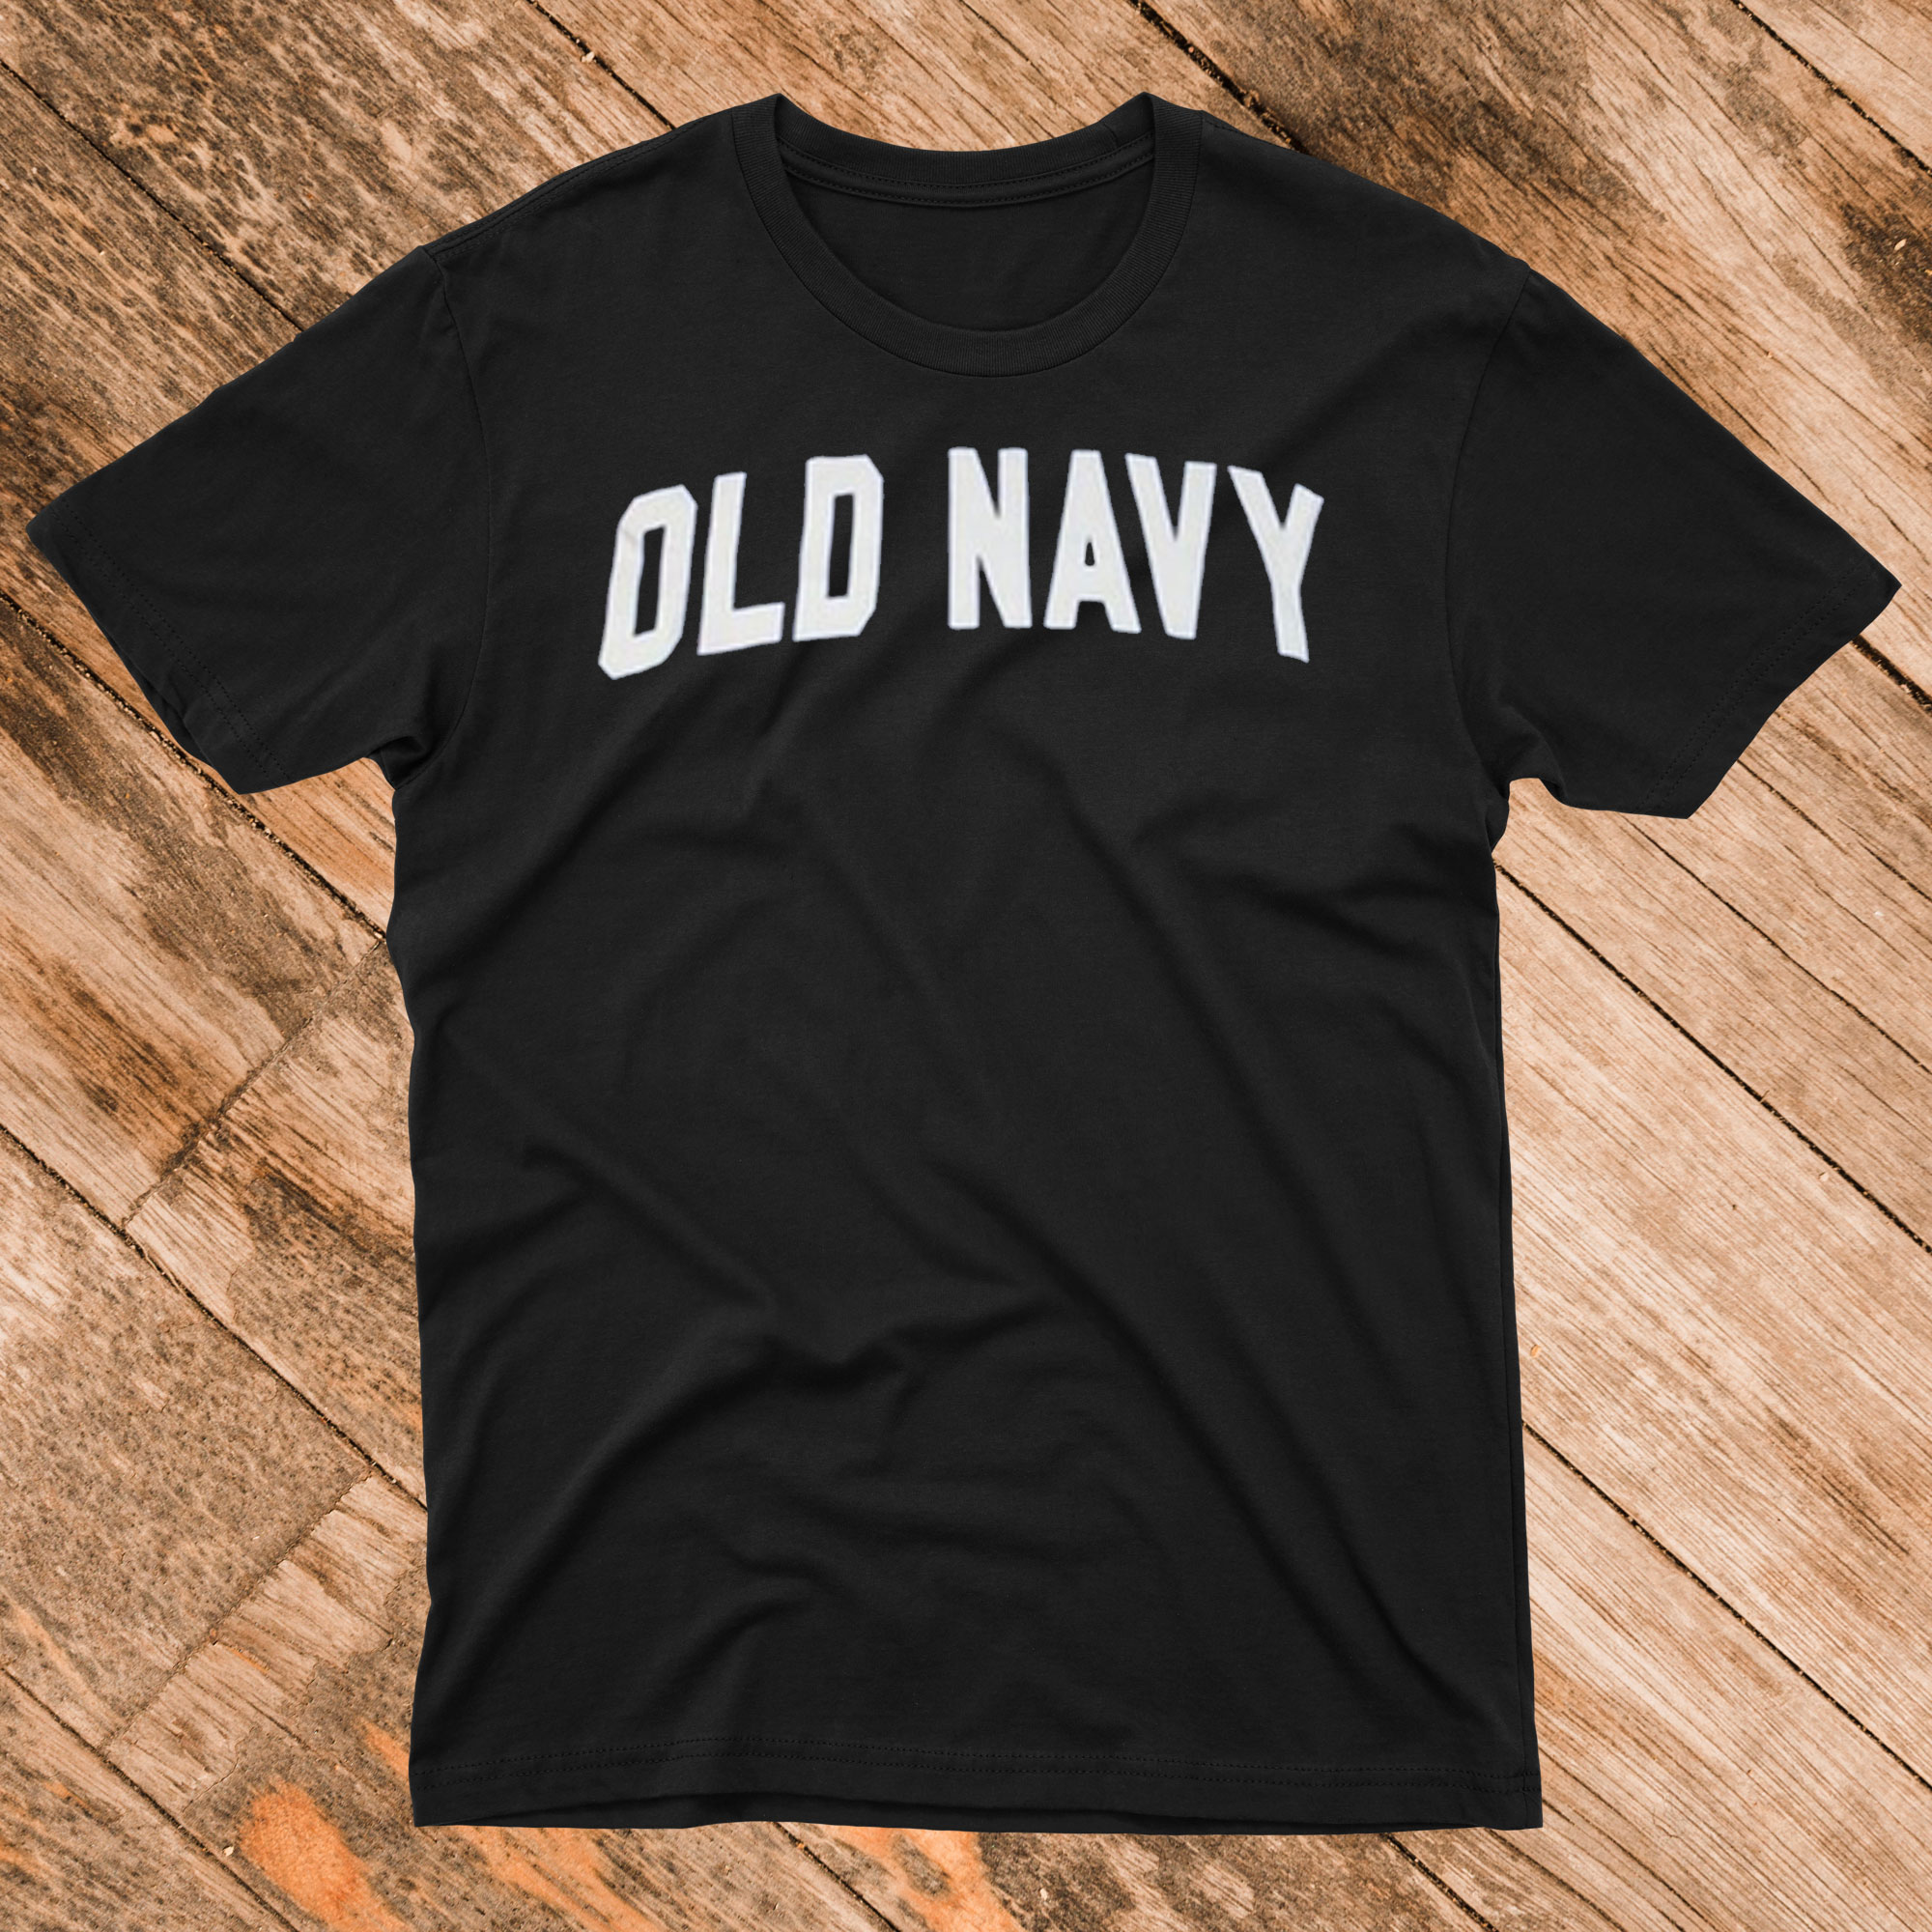 Men’s Vintage Style Old Navy T-Shirt